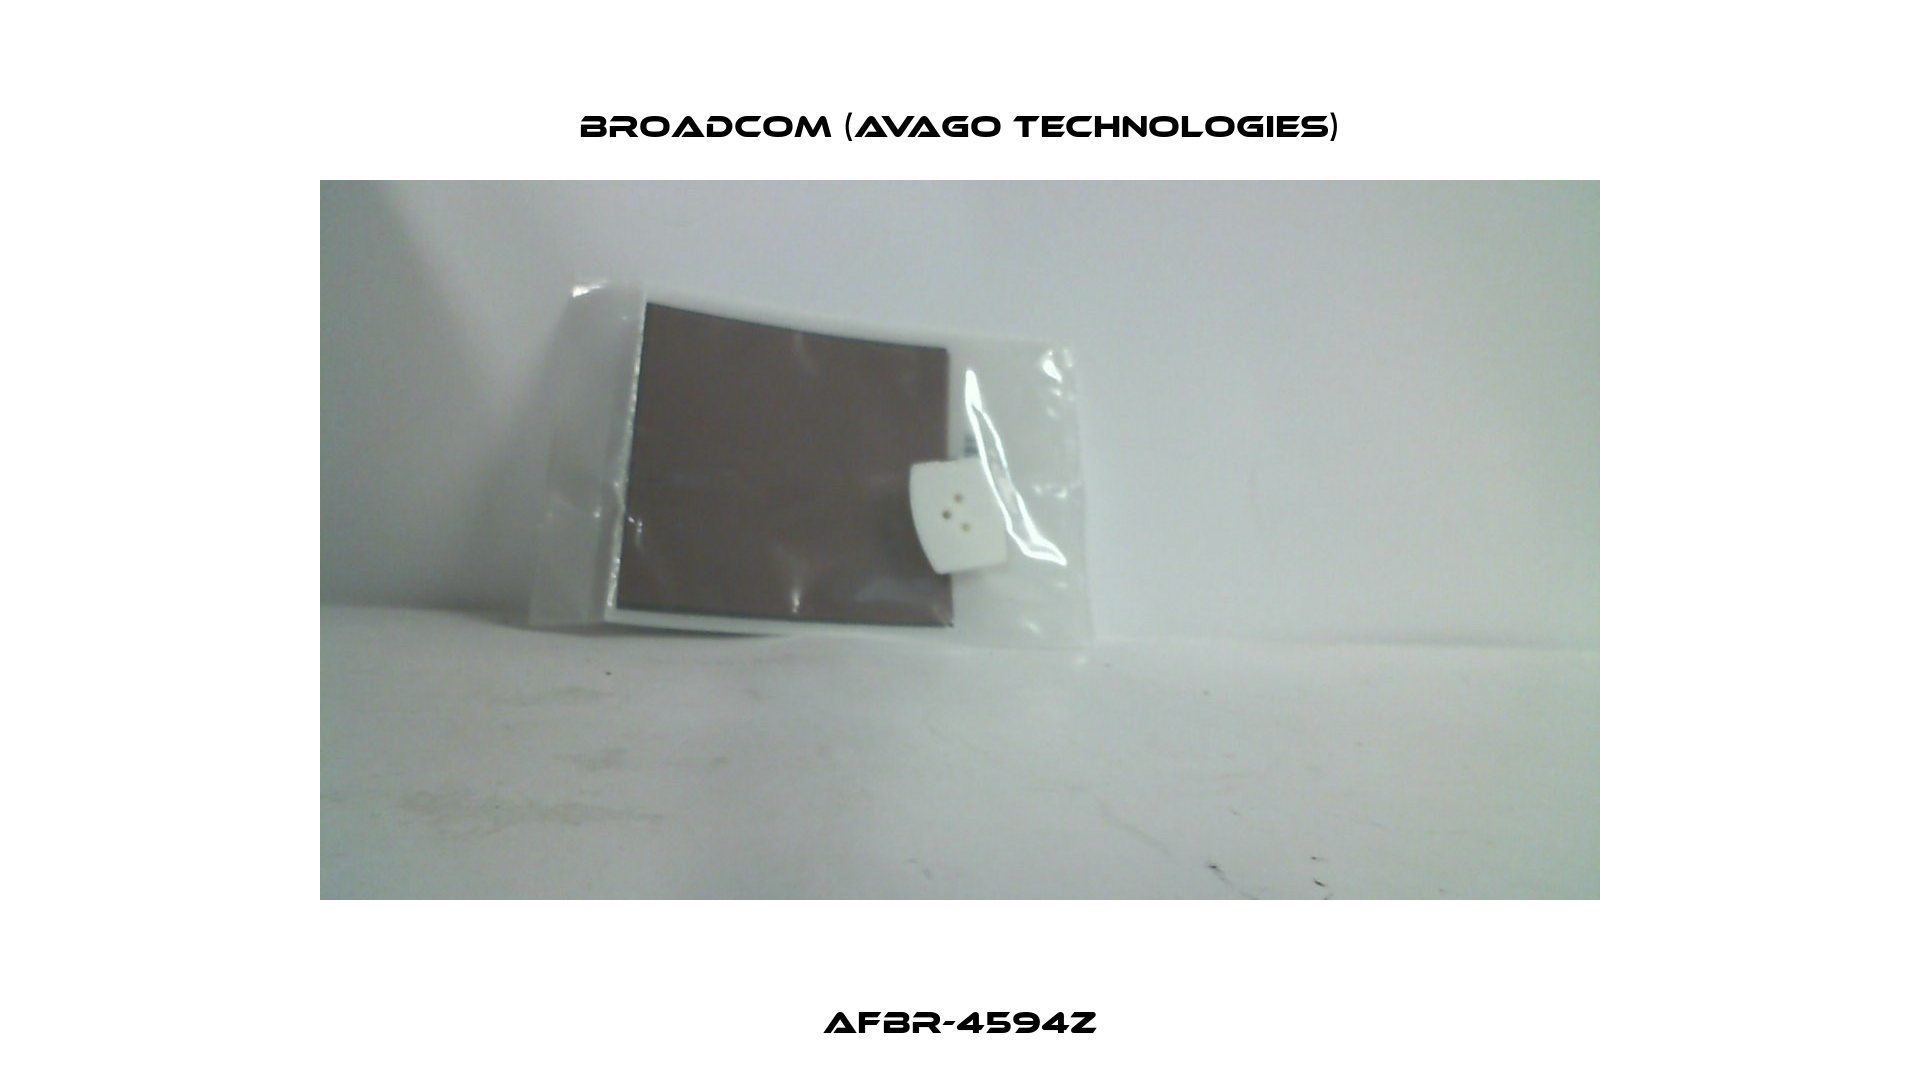 AFBR-4594Z Broadcom (Avago Technologies)